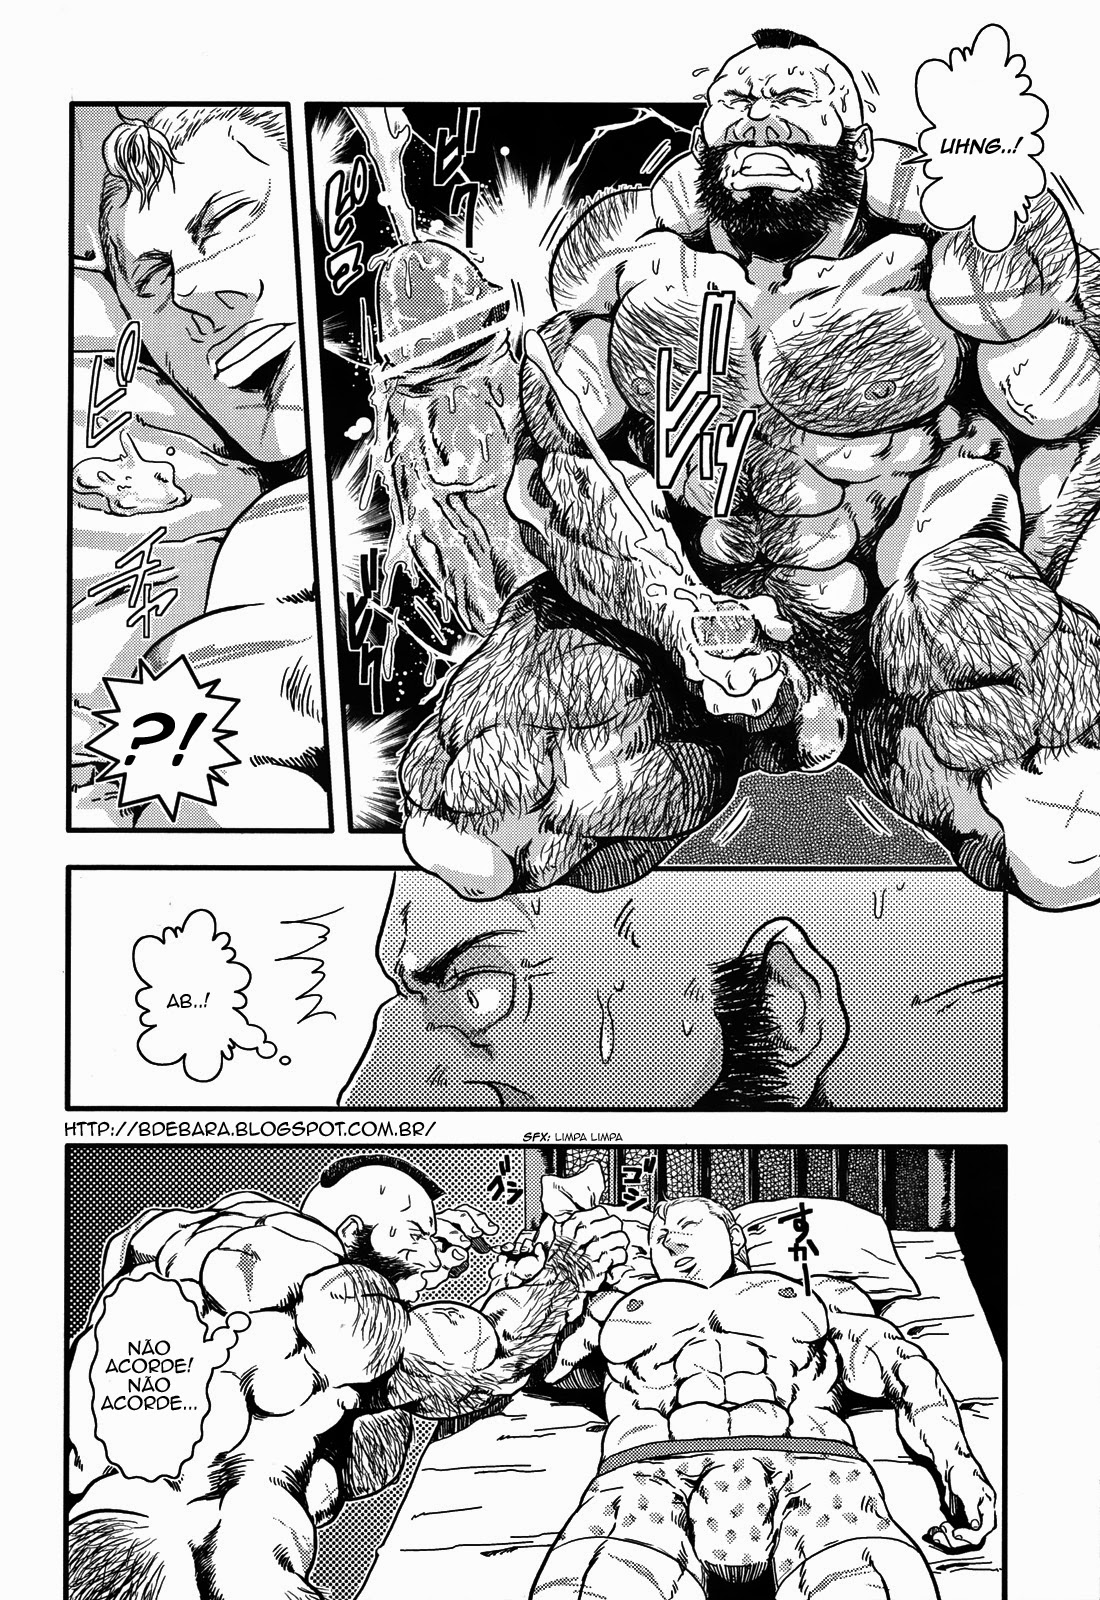 Oinarioimo Takeo Company Sakura Street Fighter IV Doces Memórias Zangief x Abel